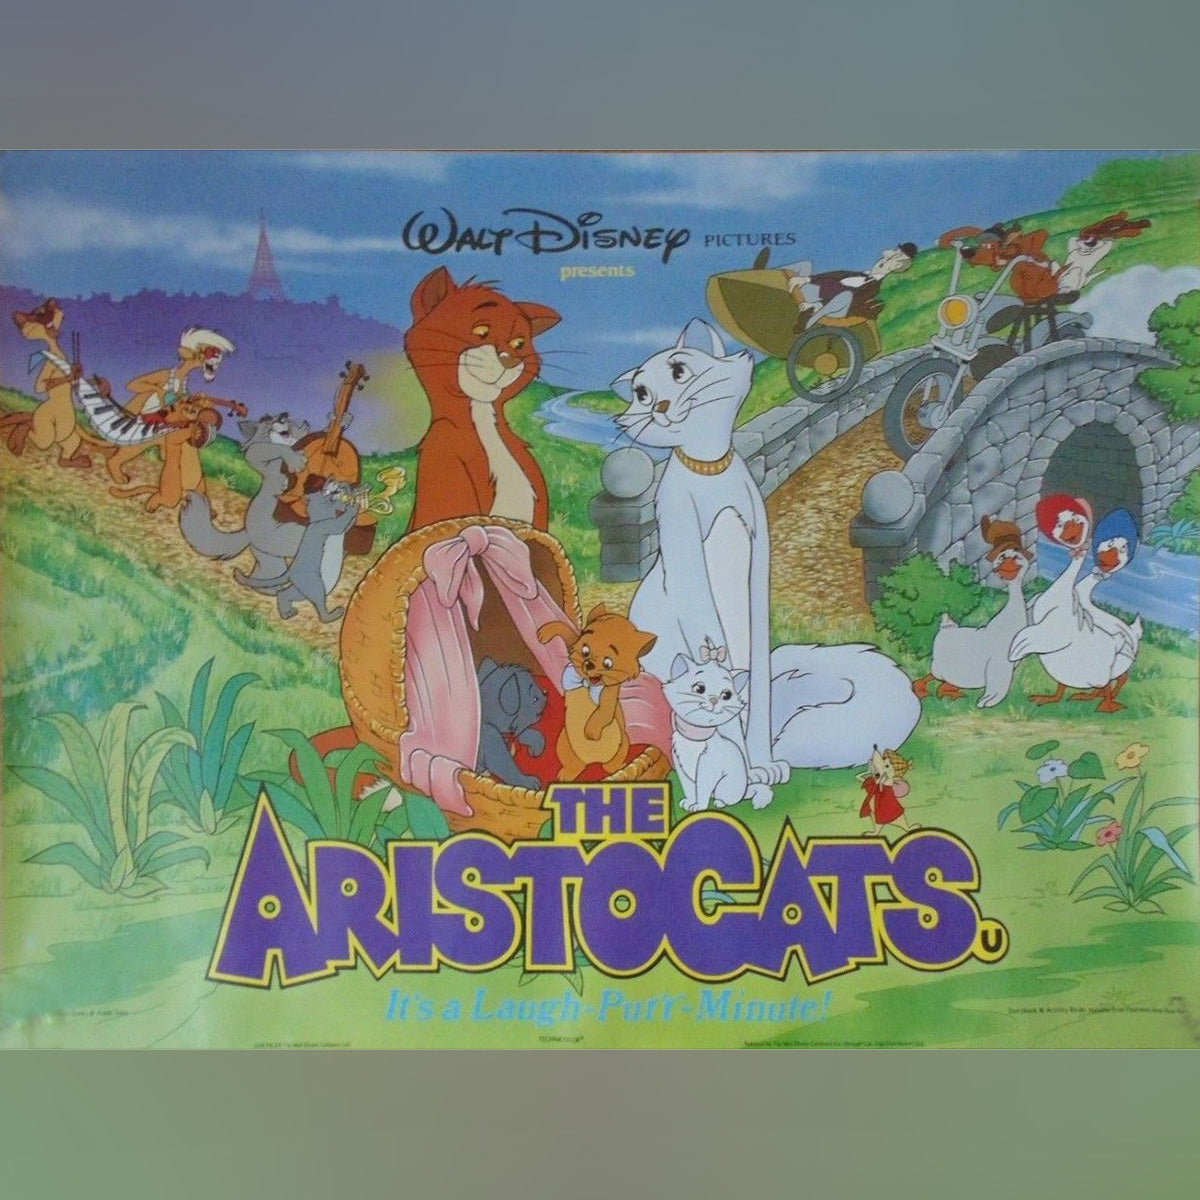 Original Movie Poster of Aristocats, The (1980R)